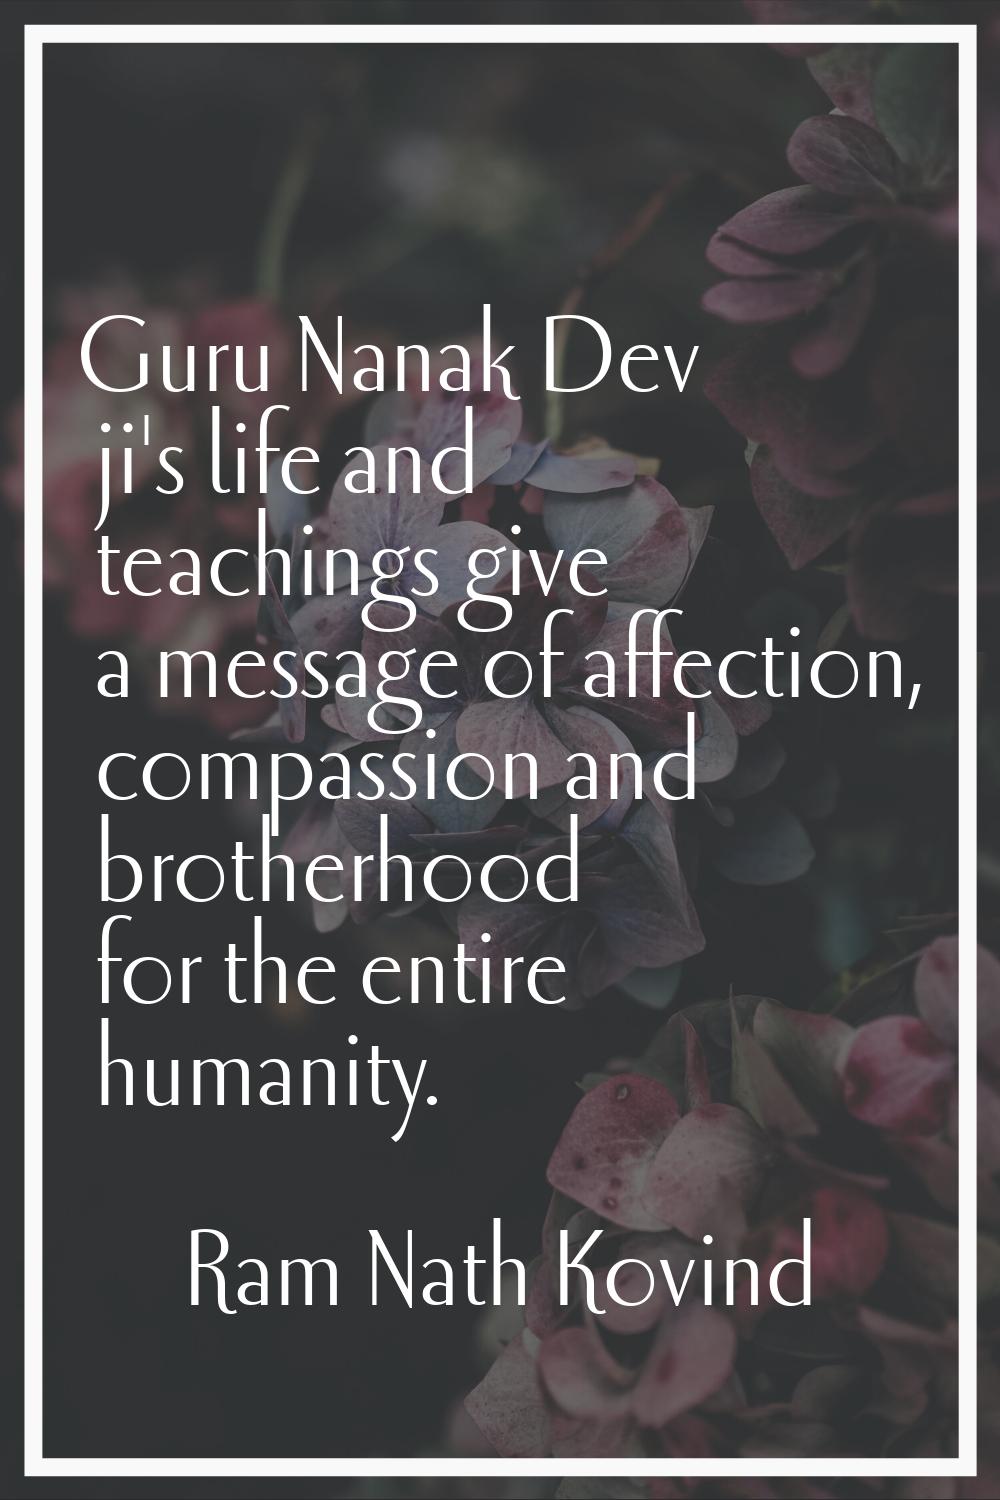 Guru Nanak Dev ji's life and teachings give a message of affection, compassion and brotherhood for 